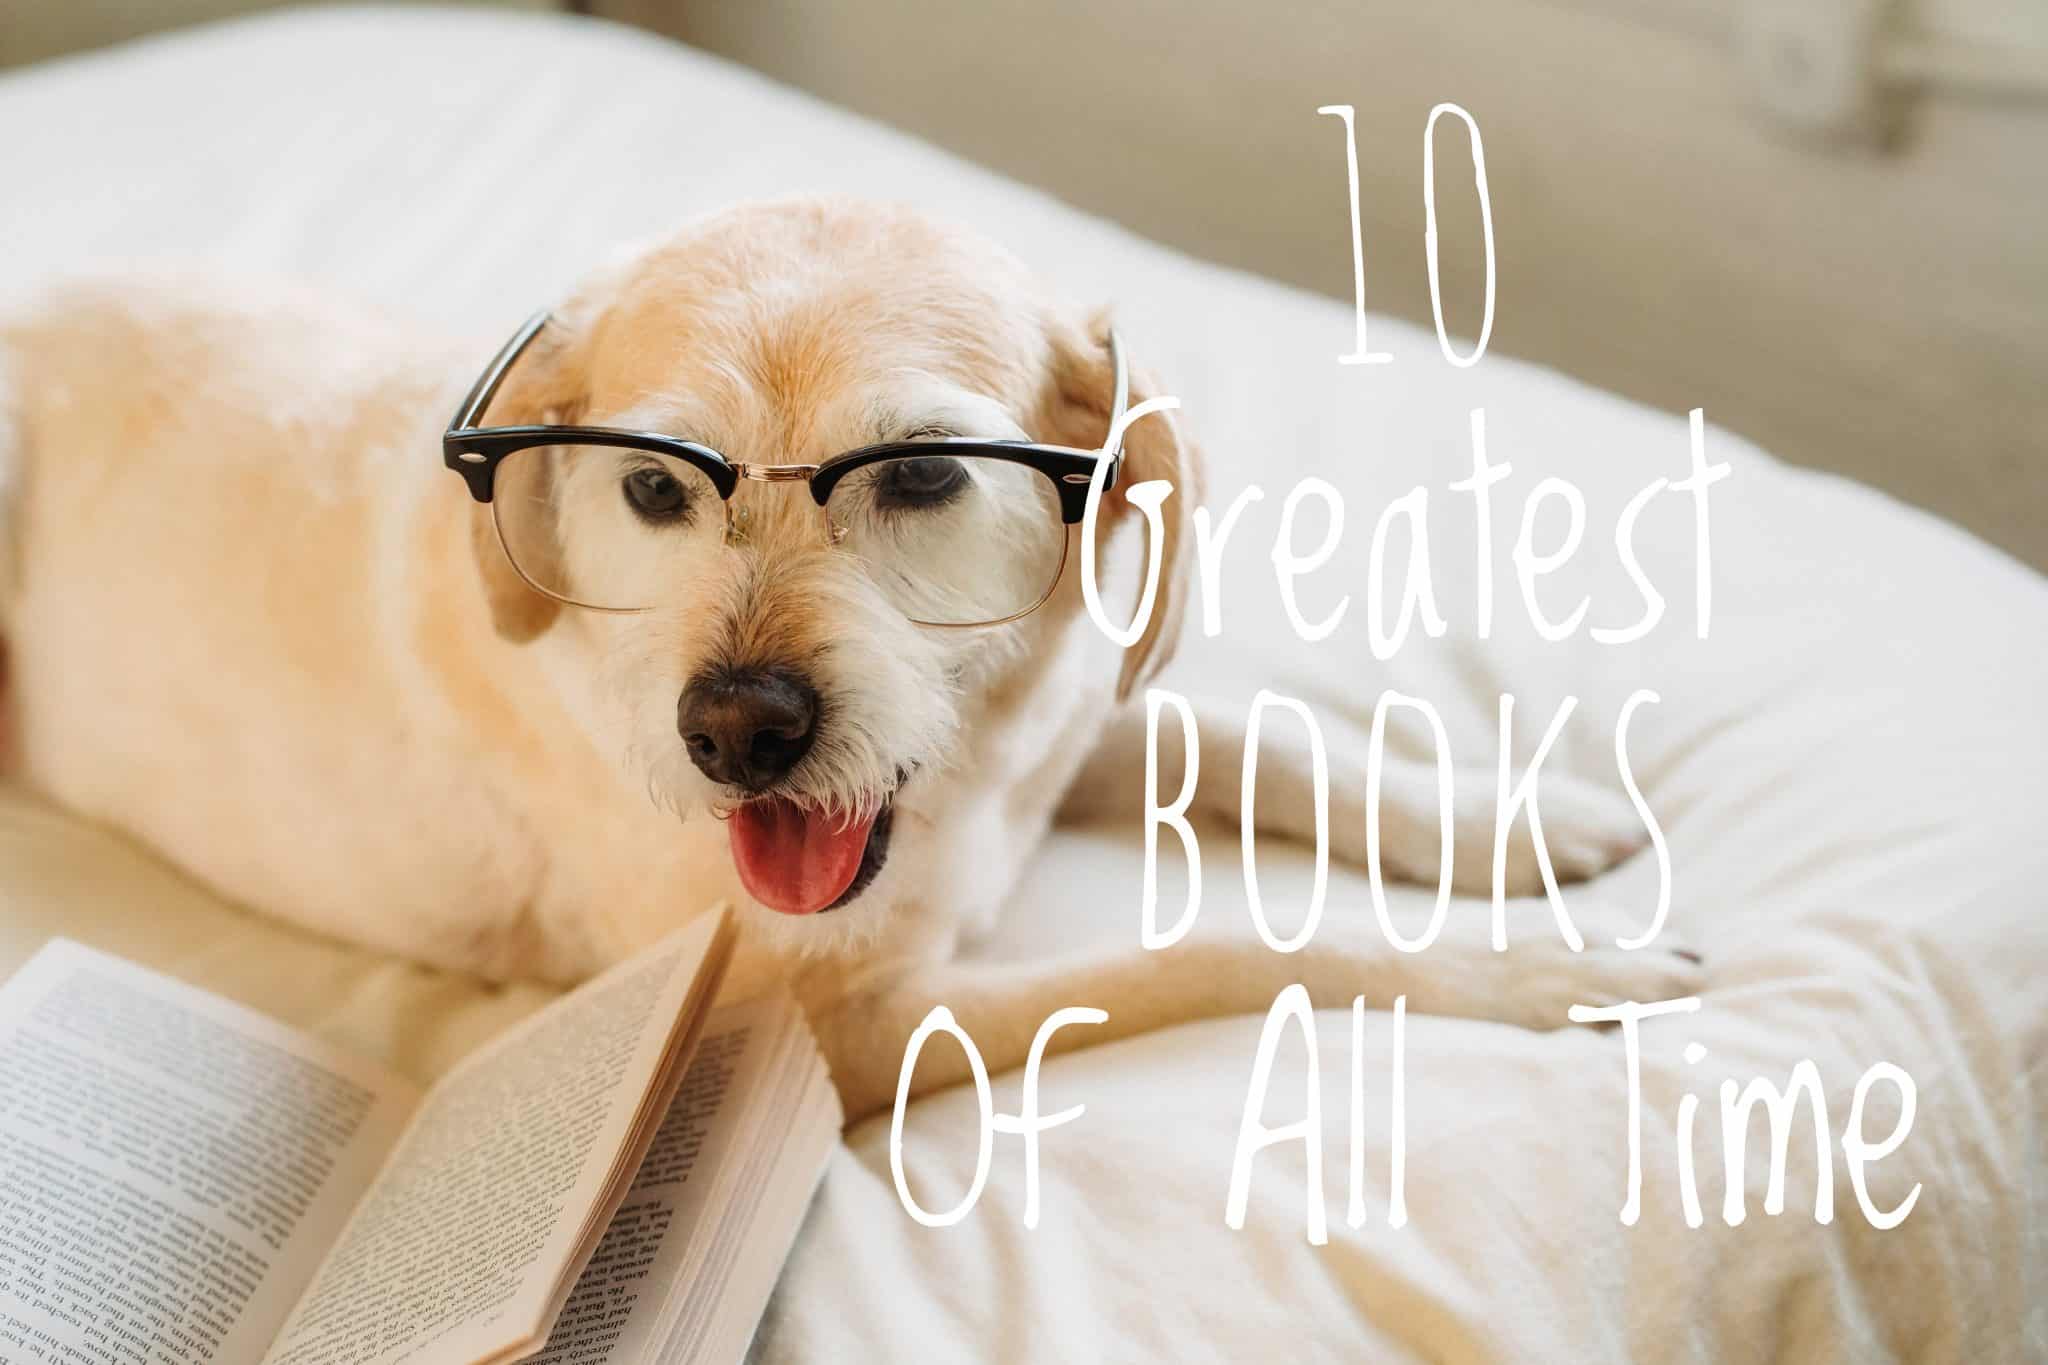 10 Greatest Books